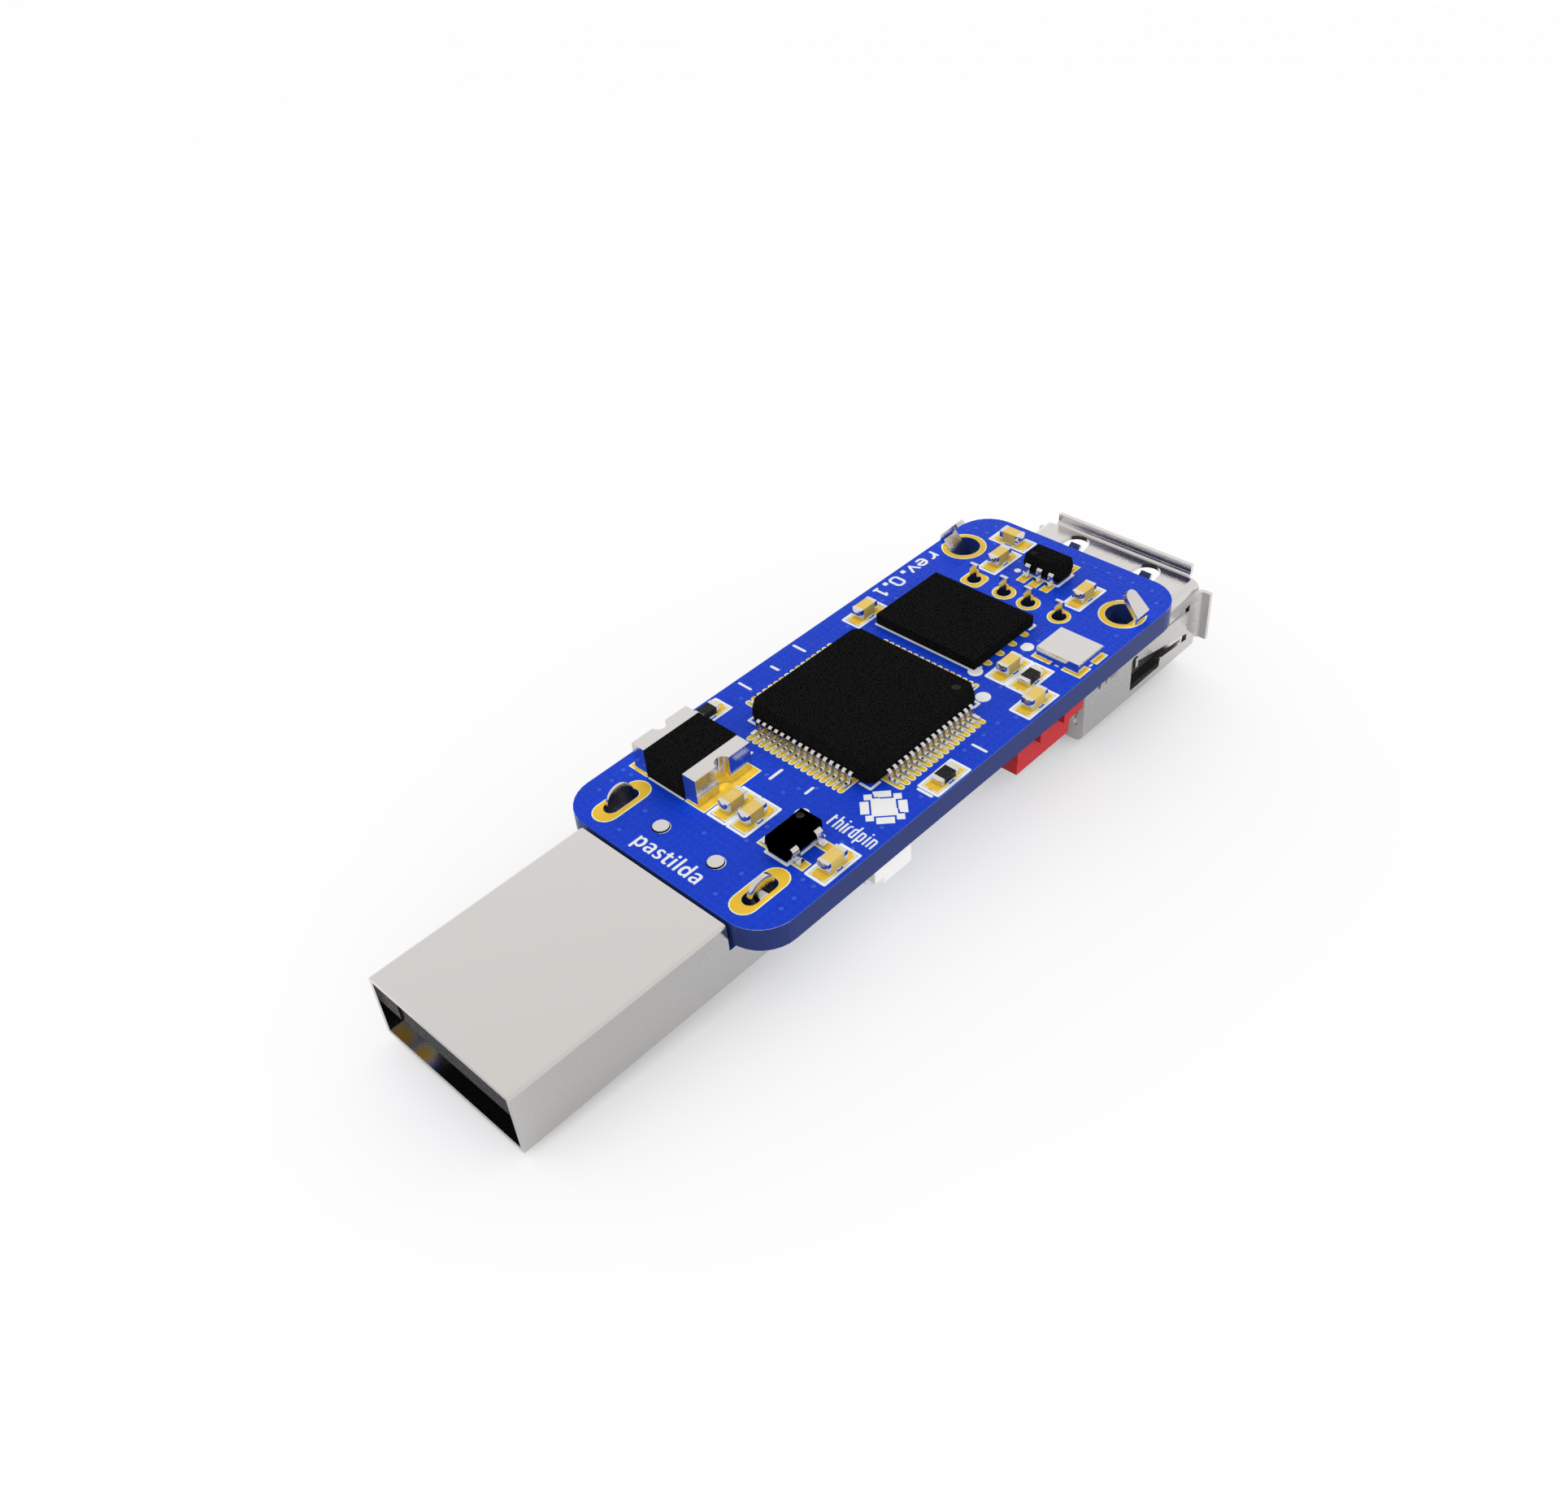 Pastilda — open source аппаратный USB менеджер паролей